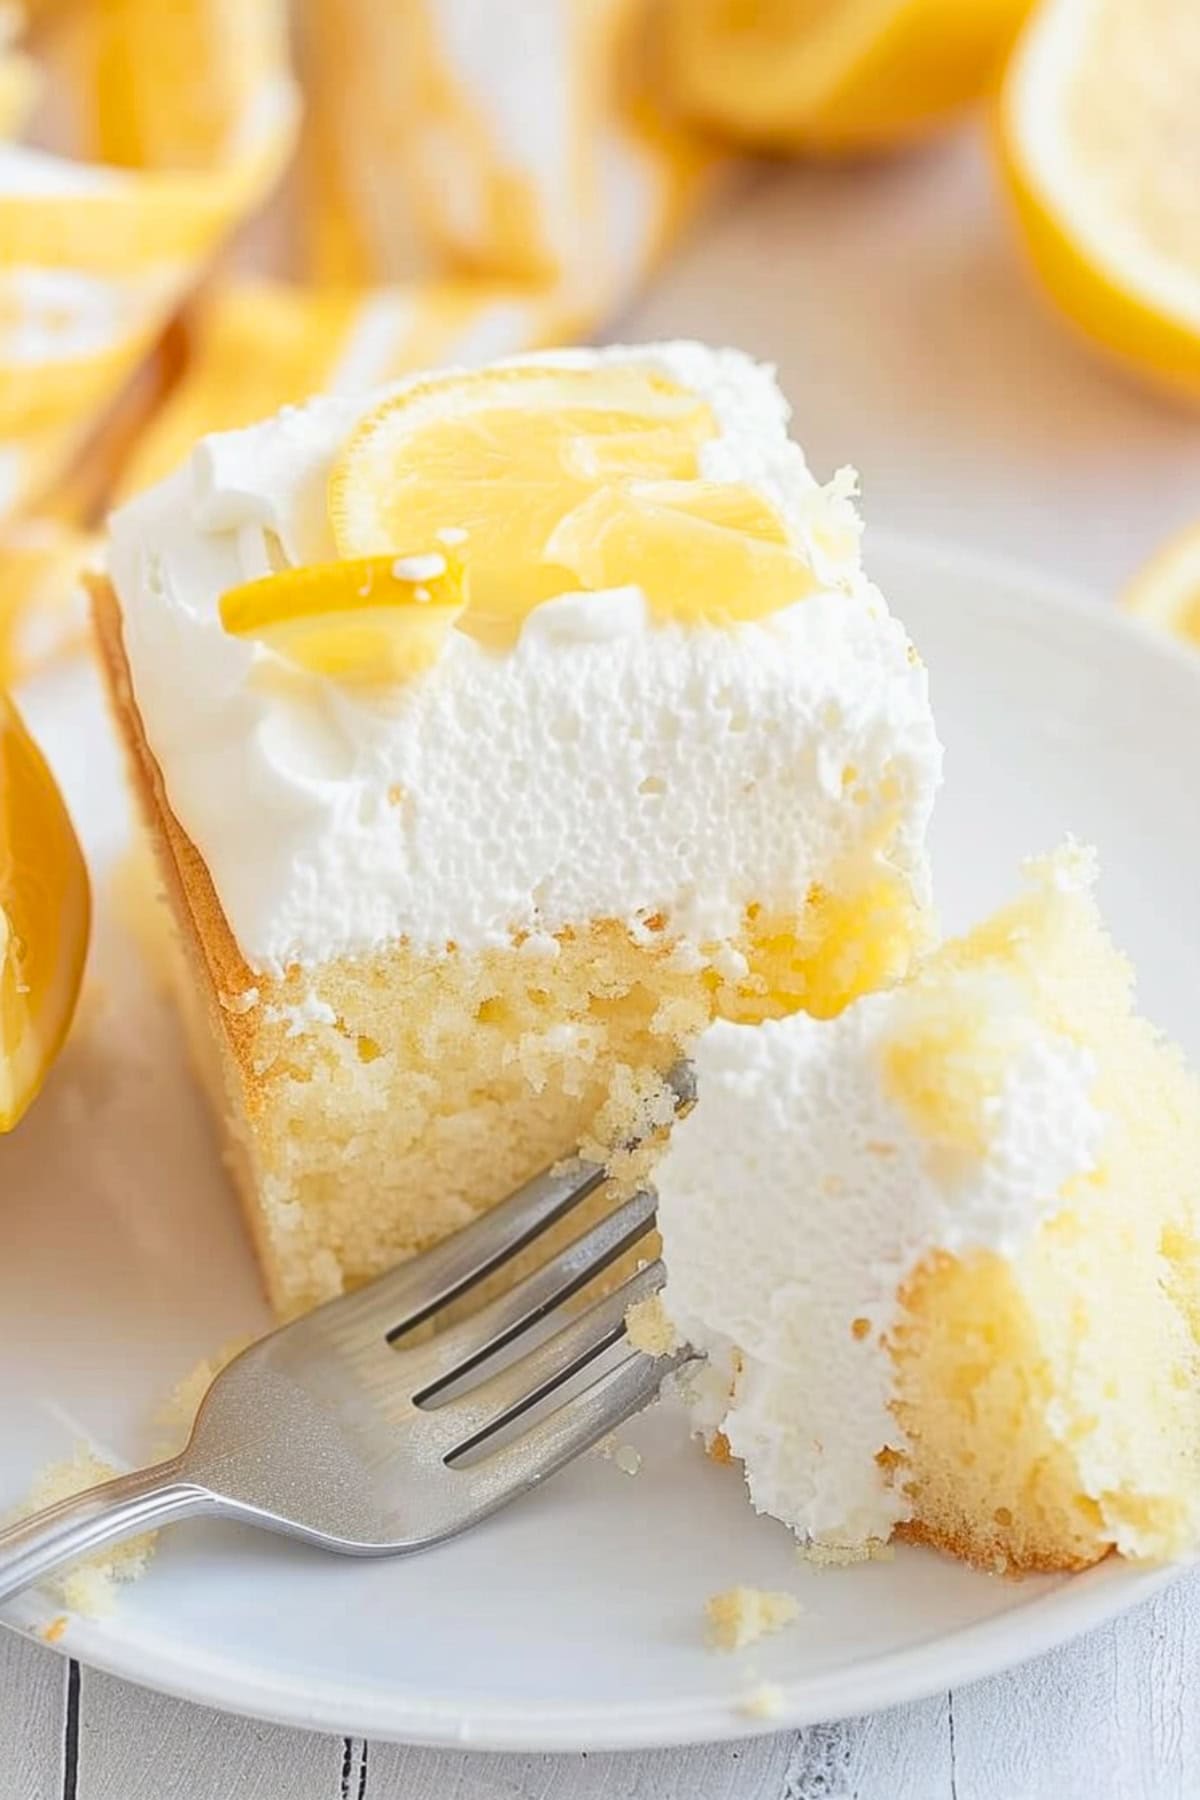 Slice of lemon crazy cake with fork.